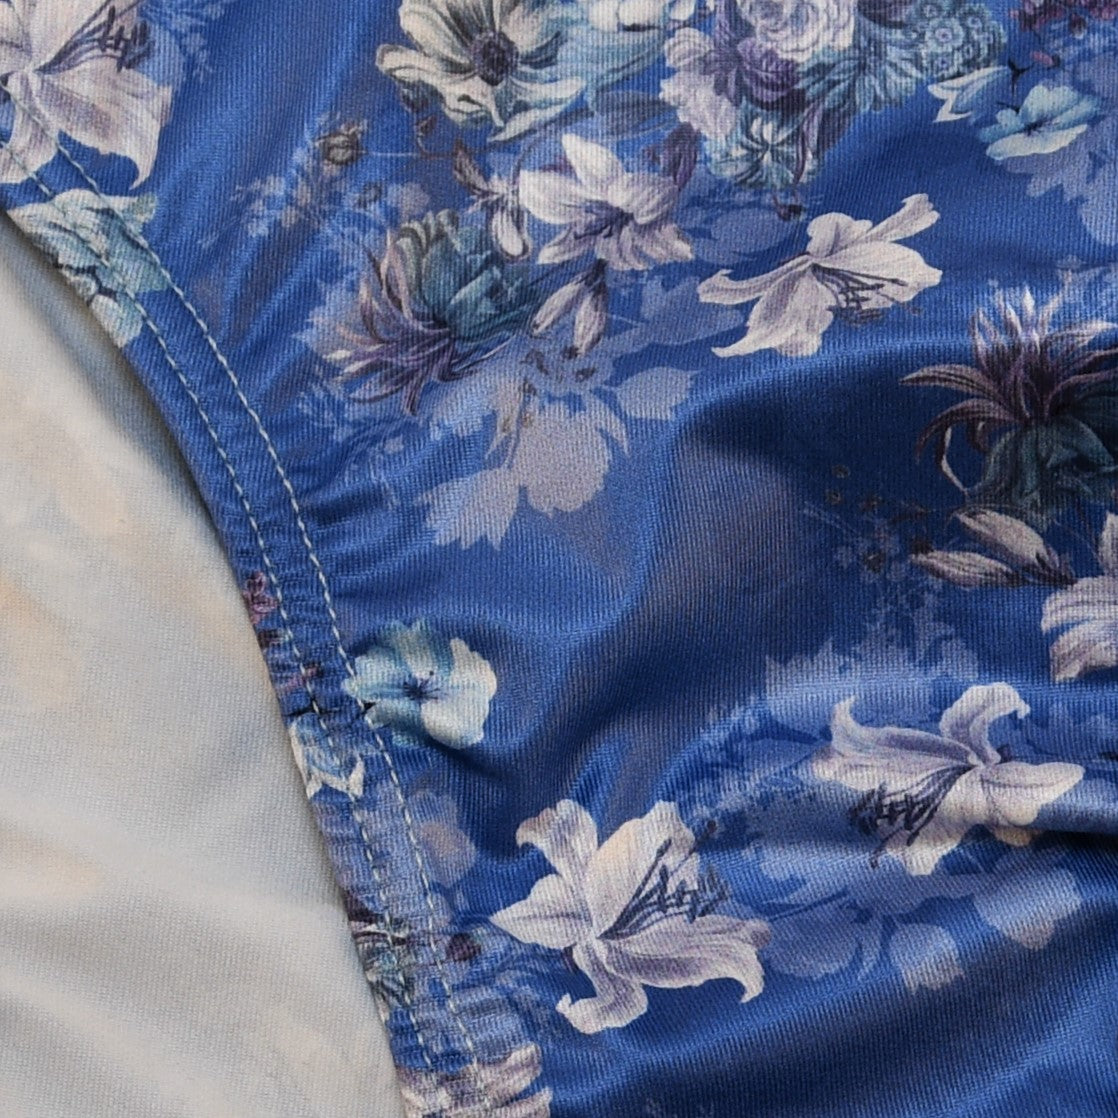 Printed Bikini Brief by Etseo Men's Underwear, blue fabric detail